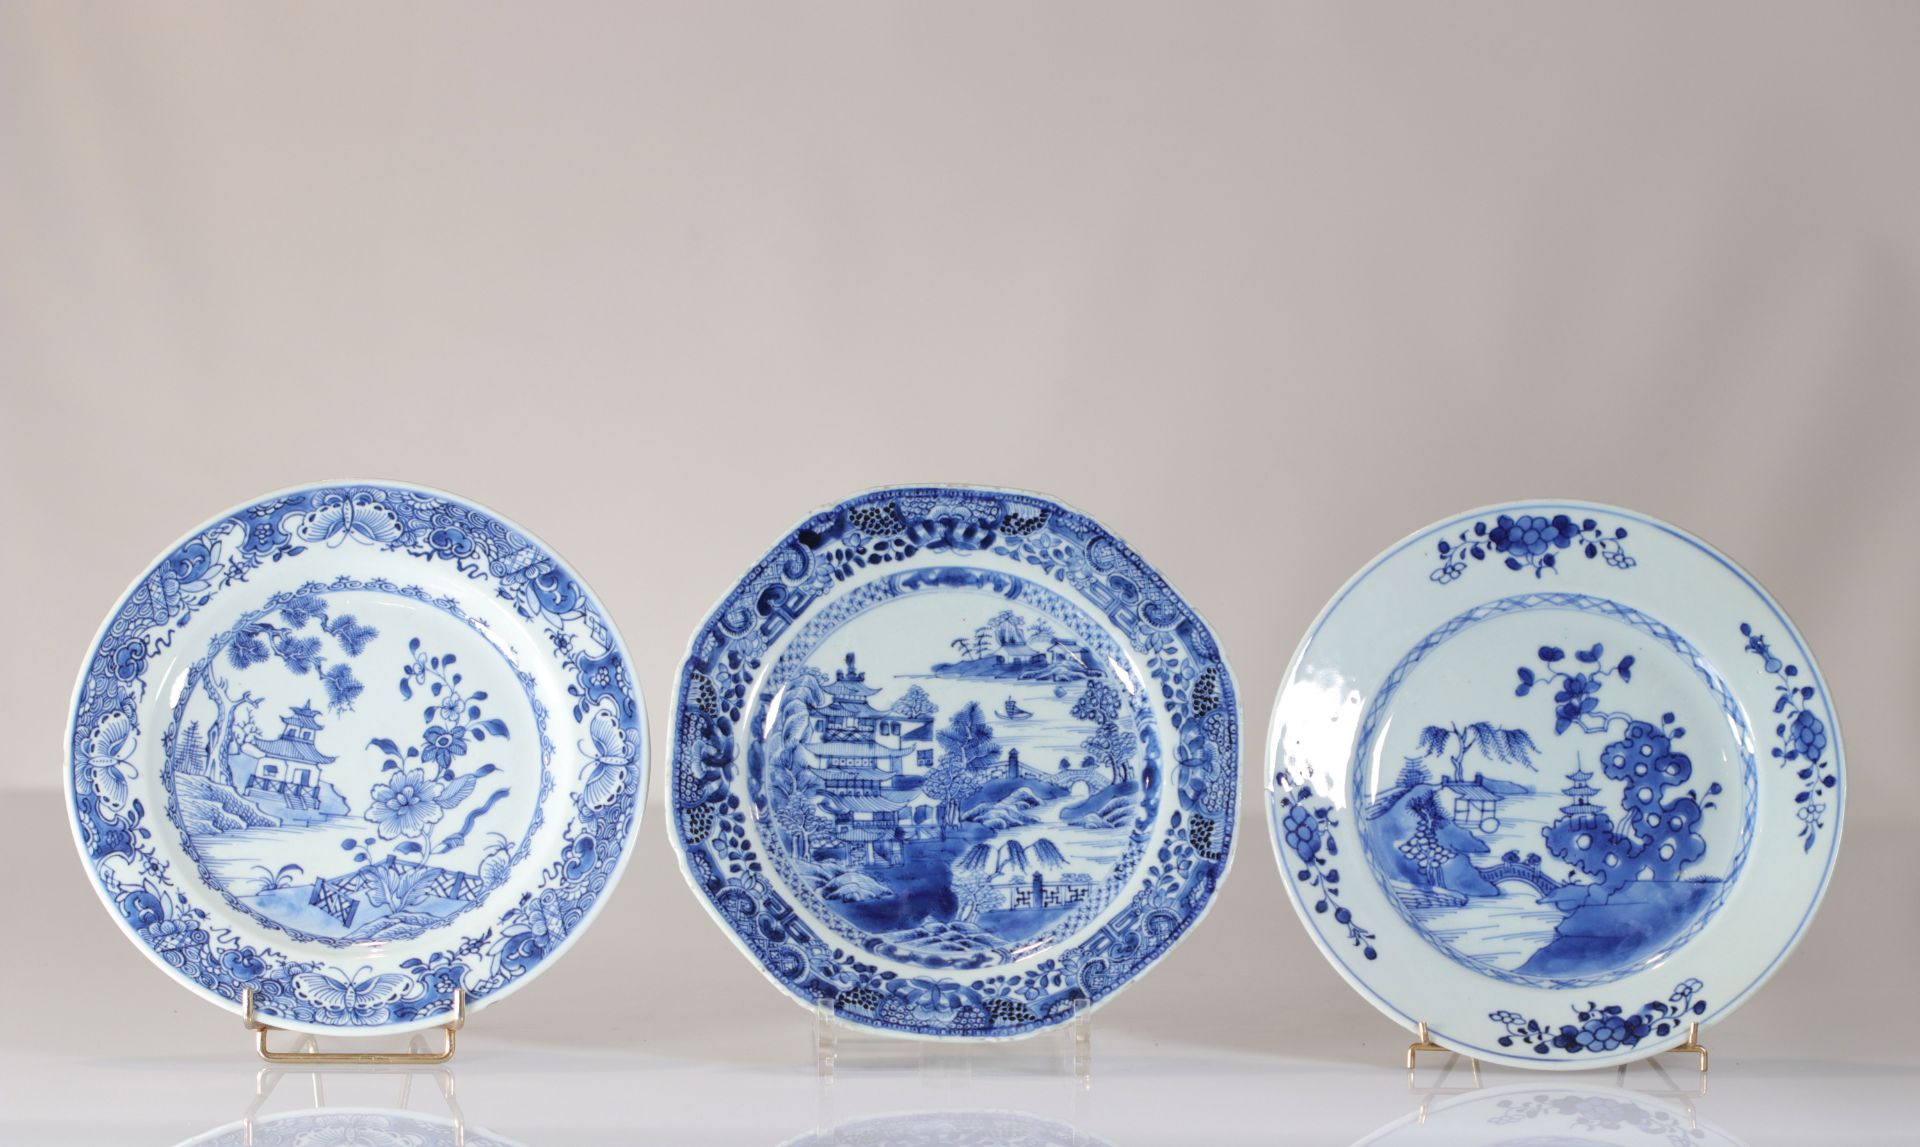 China plates (3) blanc bleu Chinese porcelain 18th